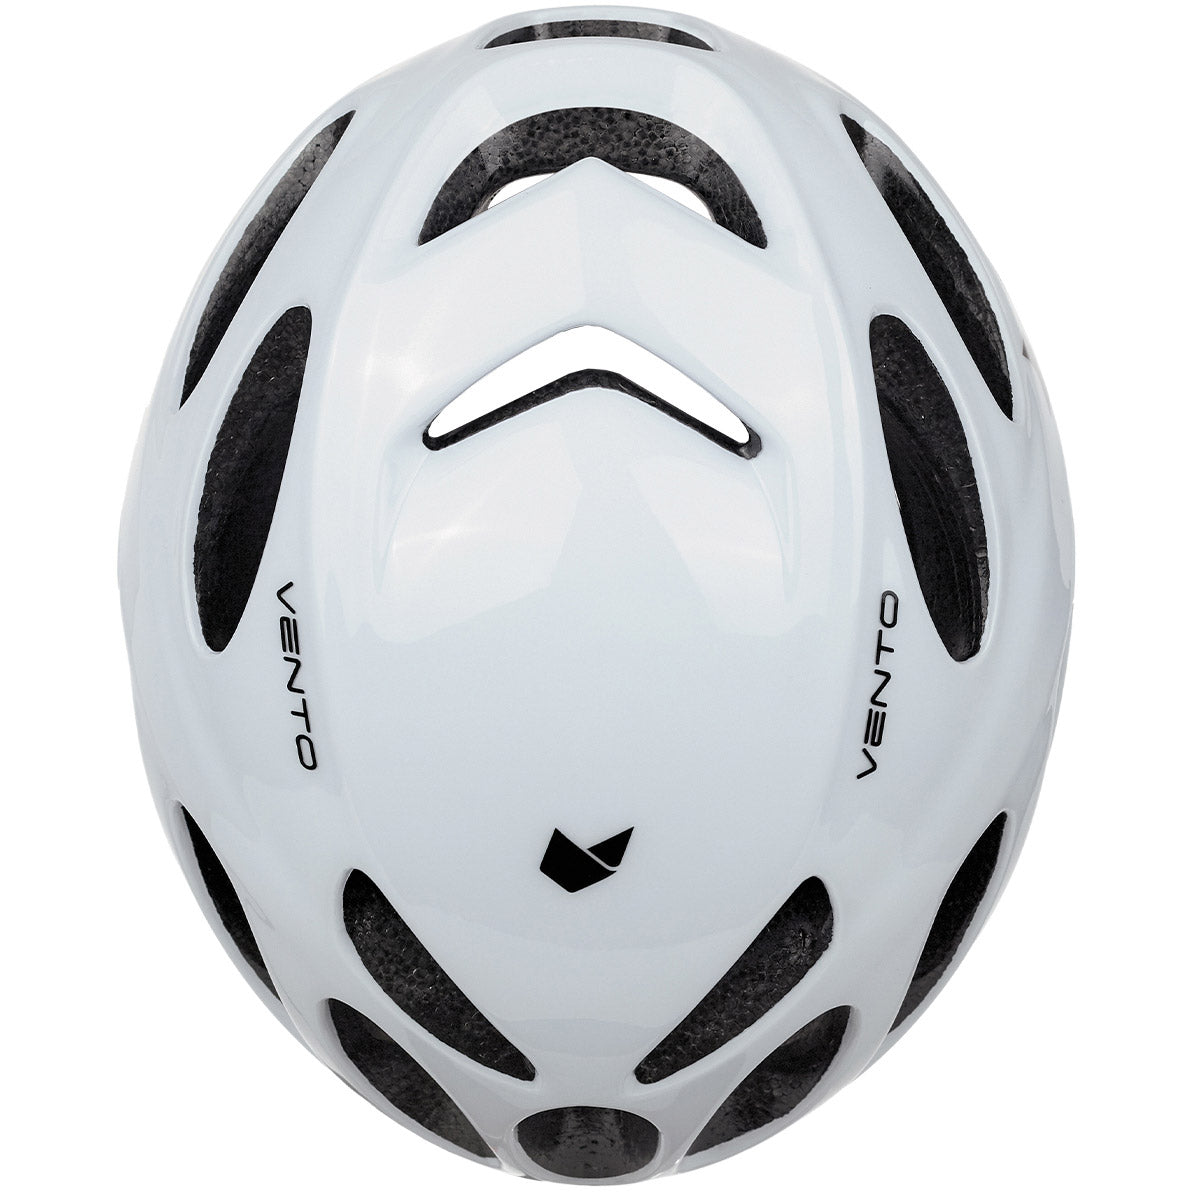 Helm de gato Vento Tamaño S 52-54 cm Gloss blanco